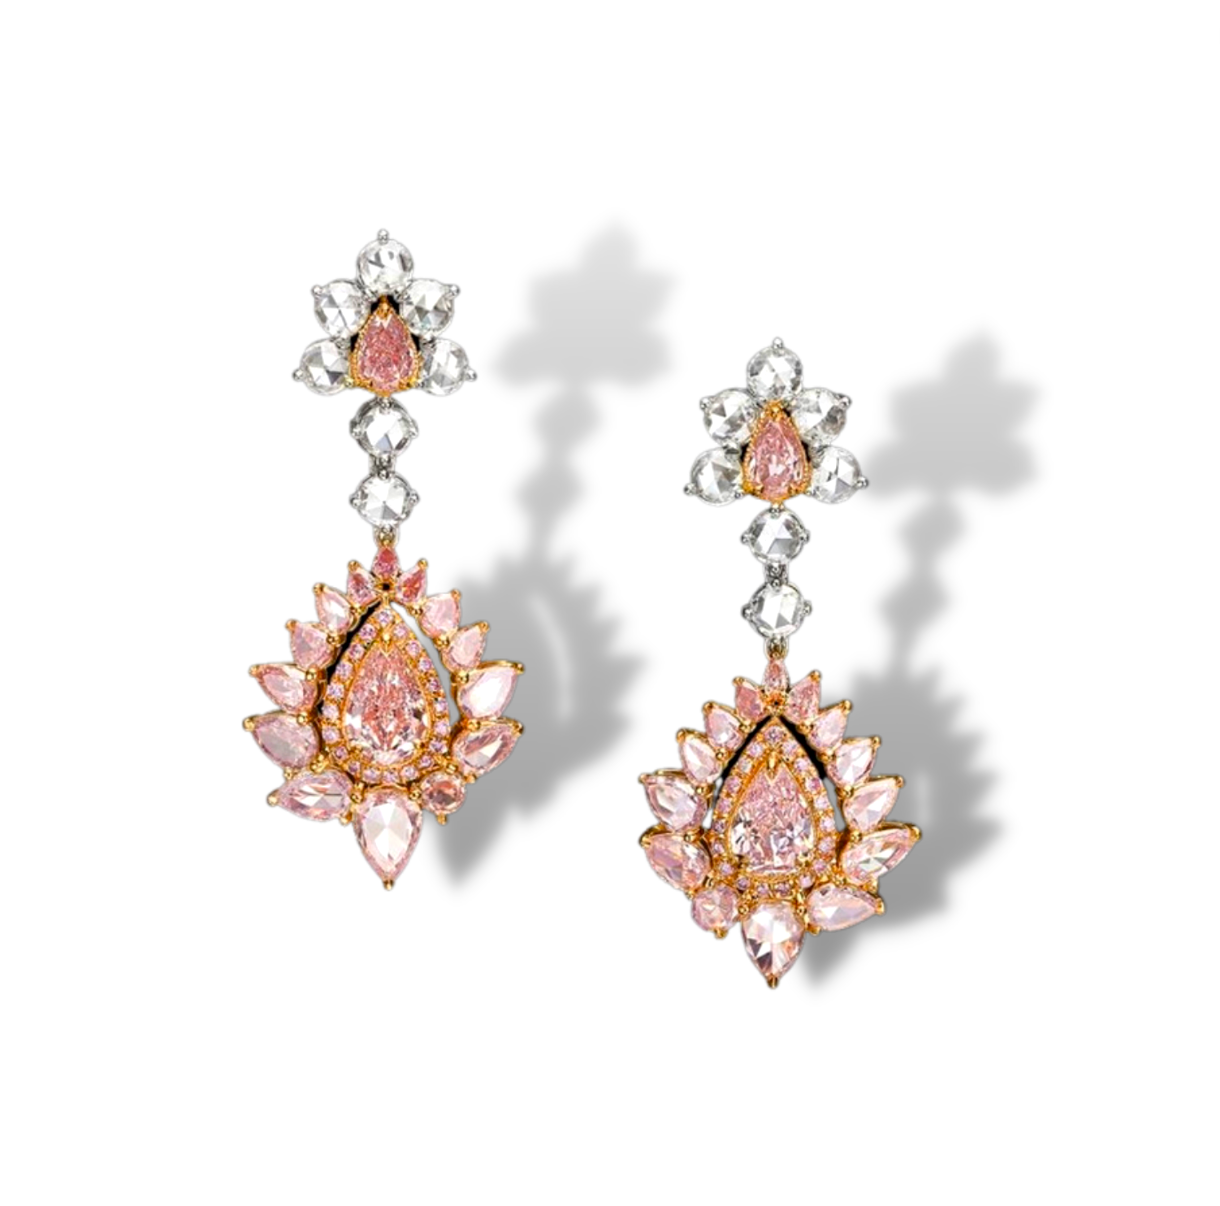 Tiara 1 Carat Pear Shape Pink Diamond Earrings | Nekta New York